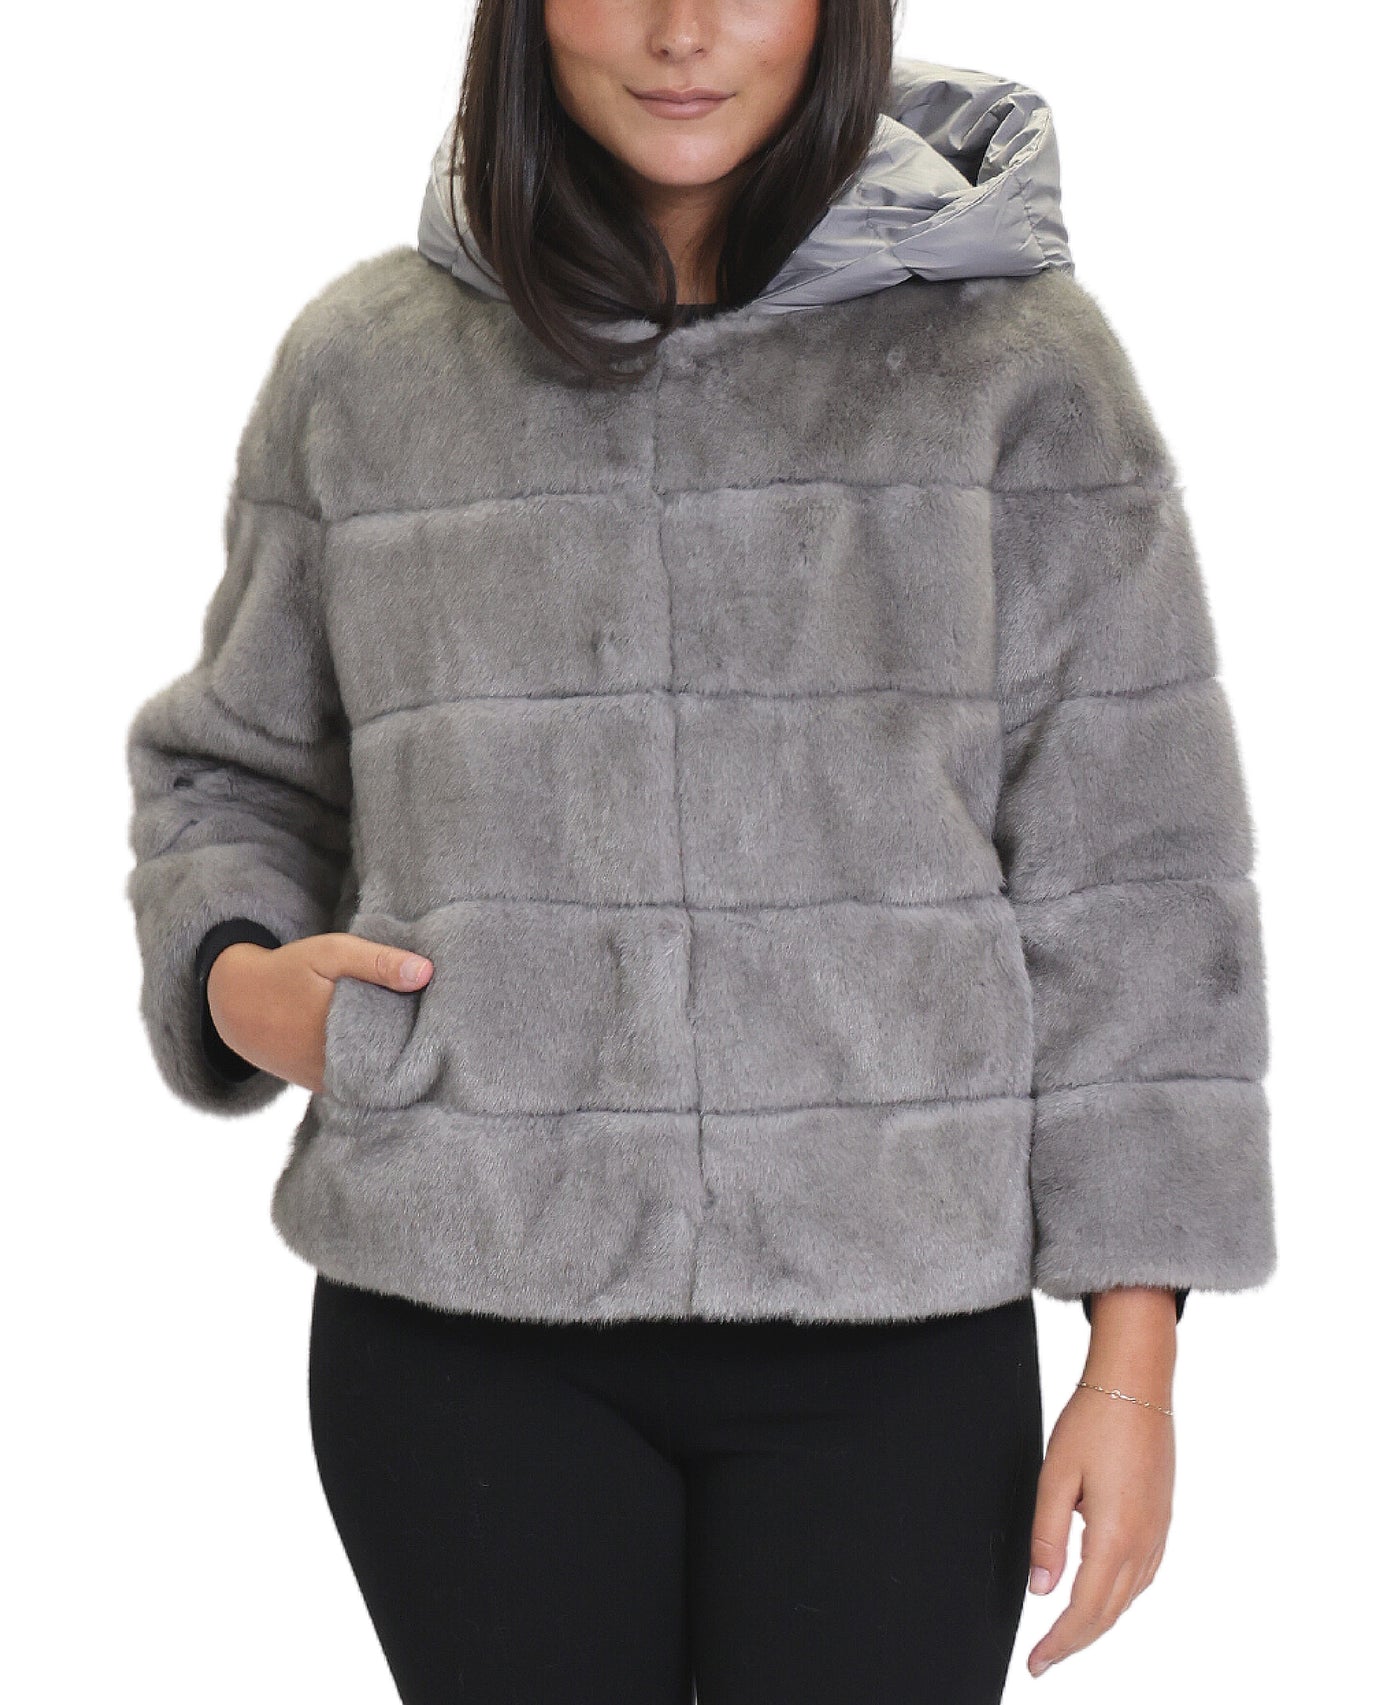 Faux Fur Jacket w/ Removable Hood image 1